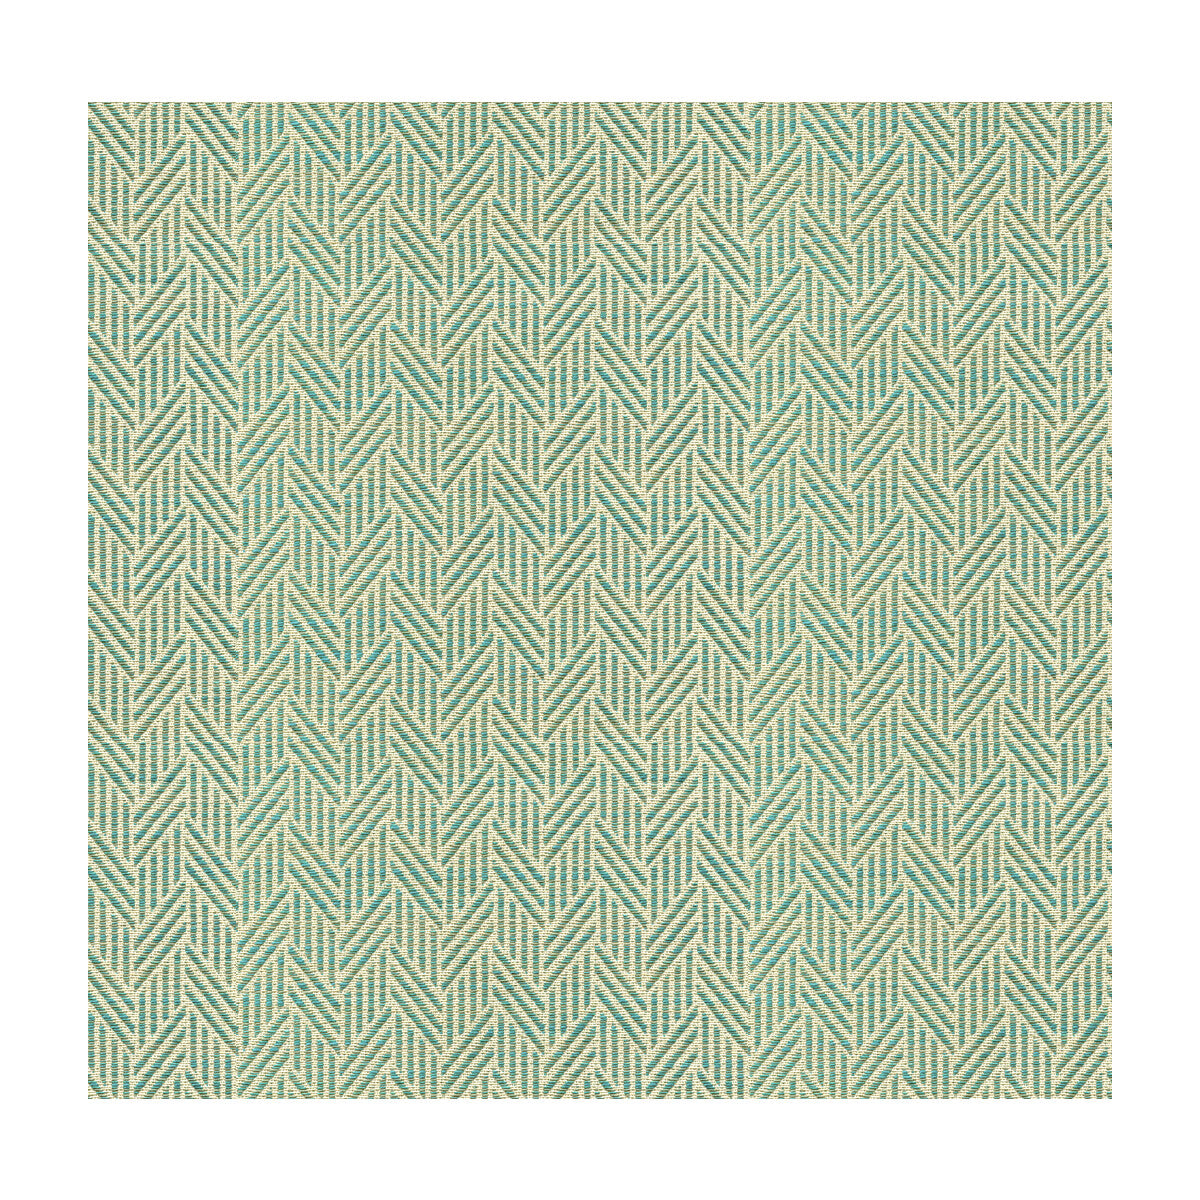 Kravet Smart fabric in 33618-135 color - pattern 33618.135.0 - by Kravet Smart